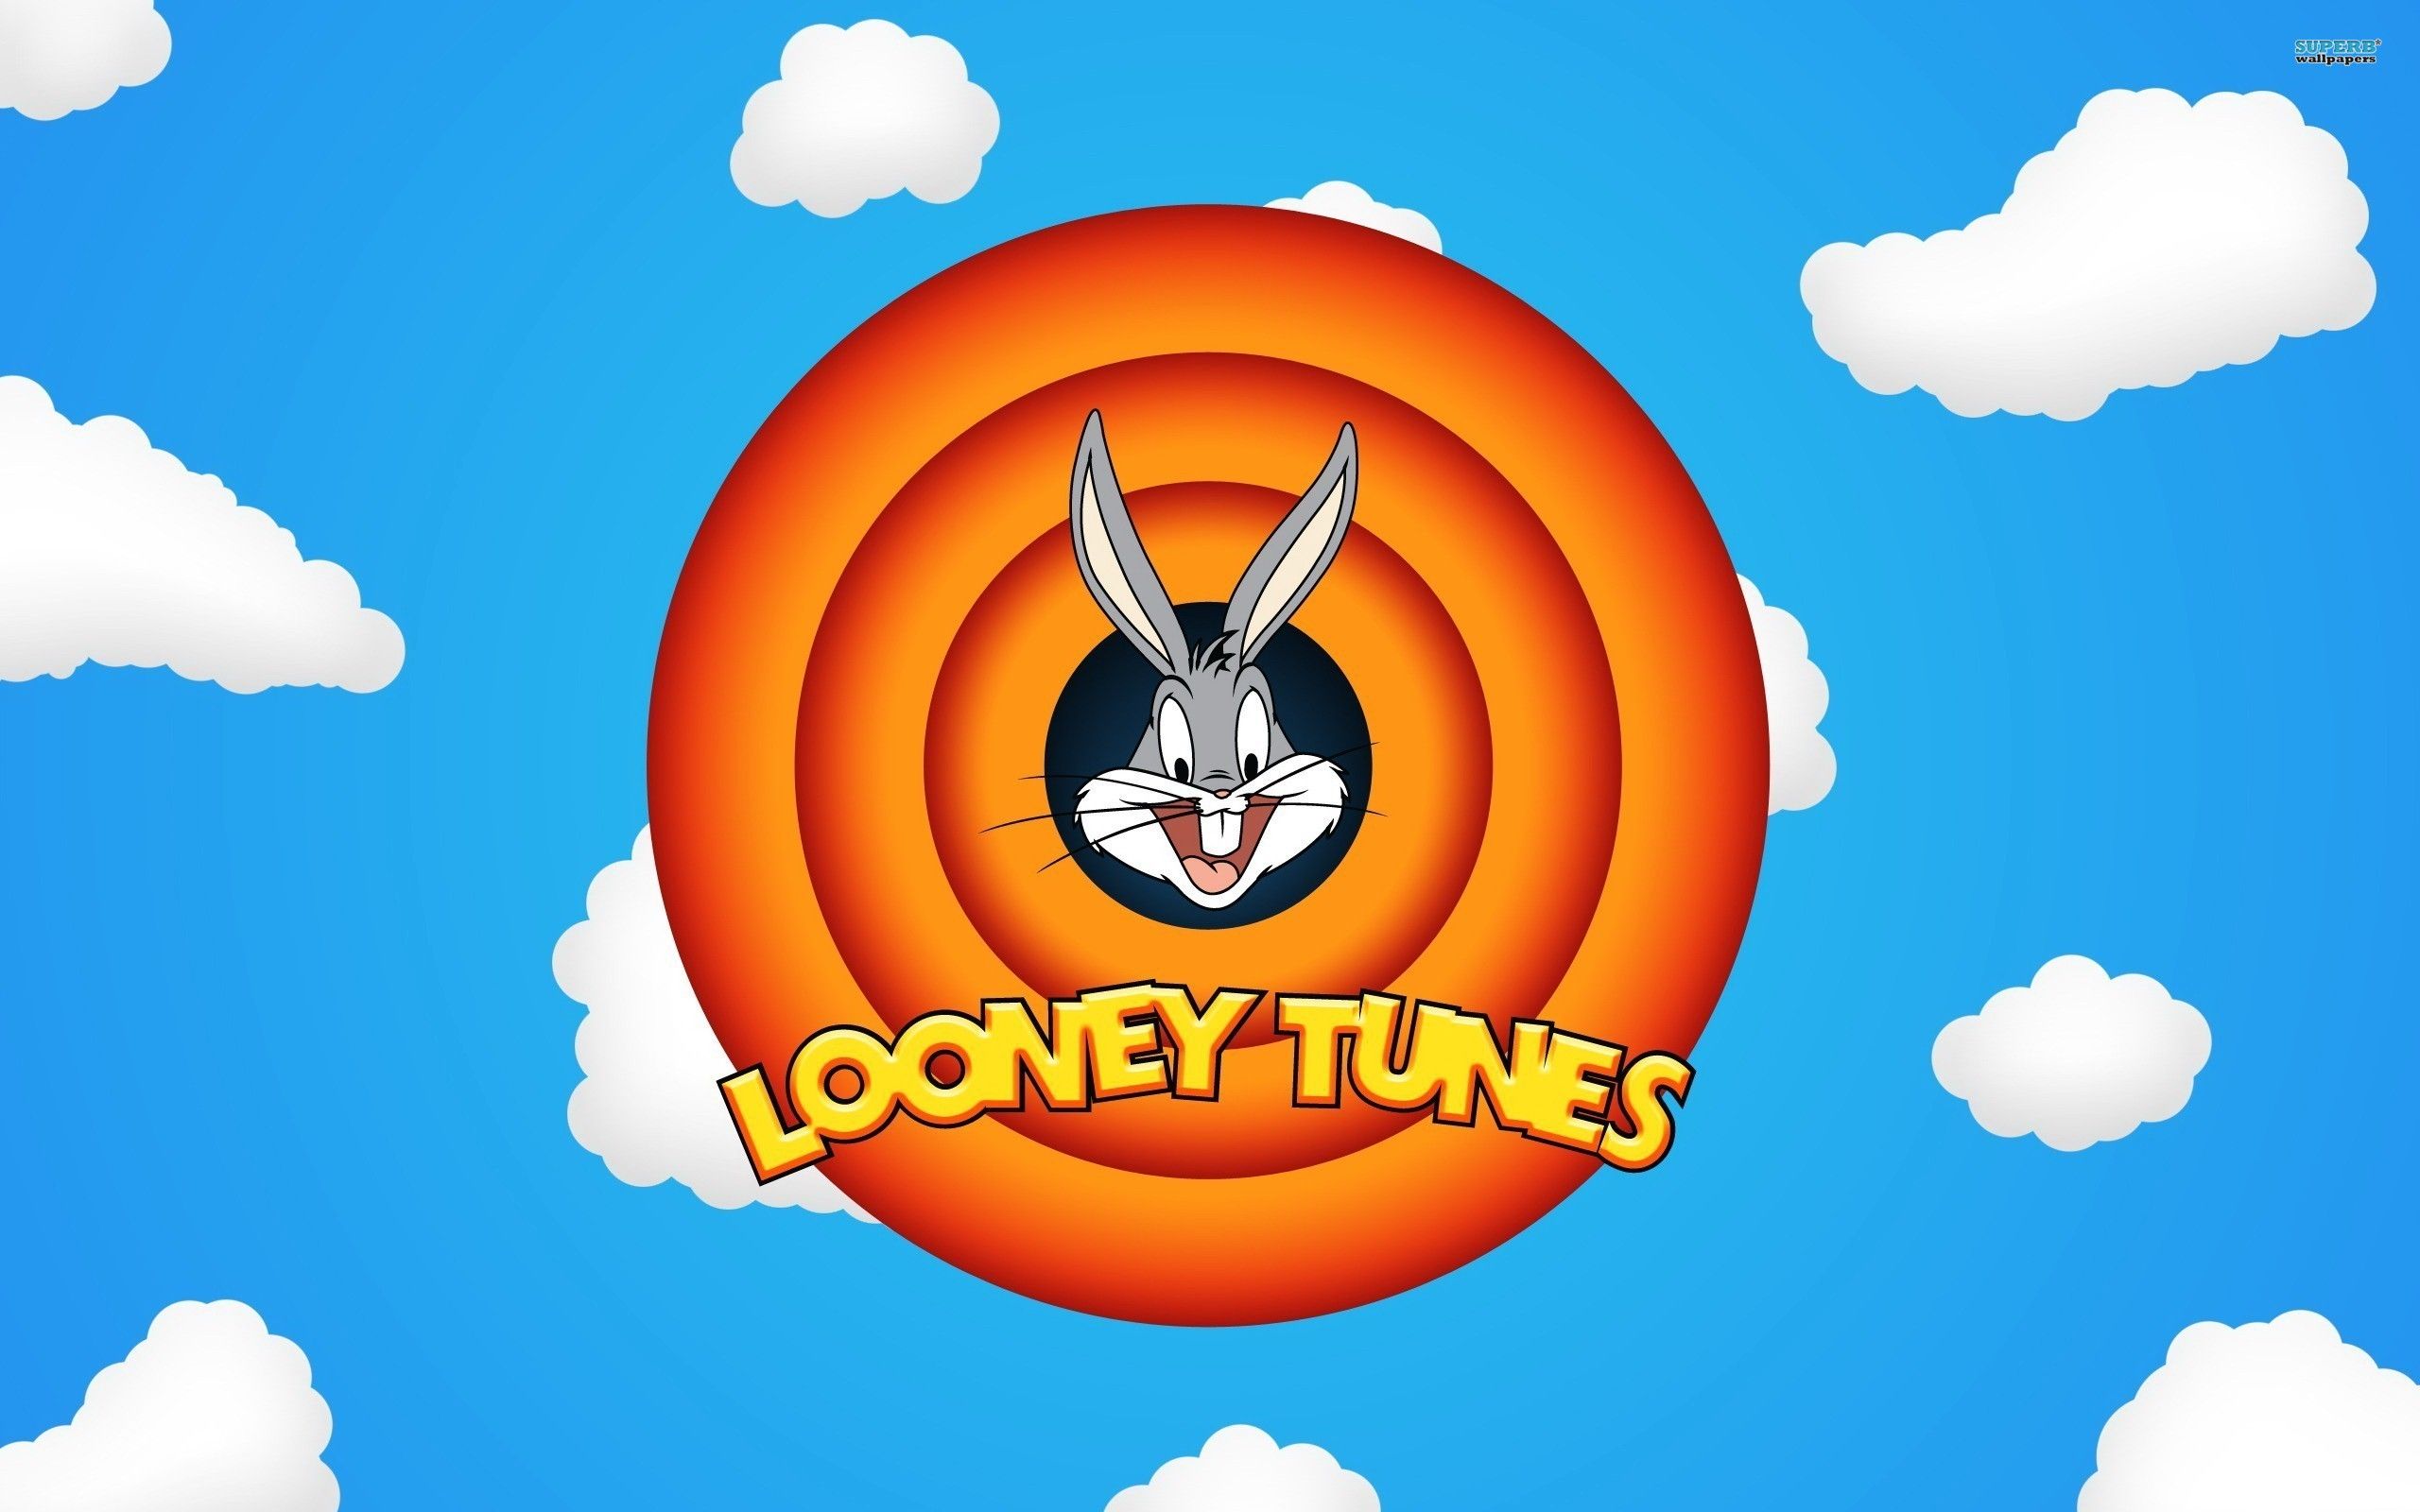 Bugs Bunny - Looney Tunes wallpaper - Cartoon wallpapers